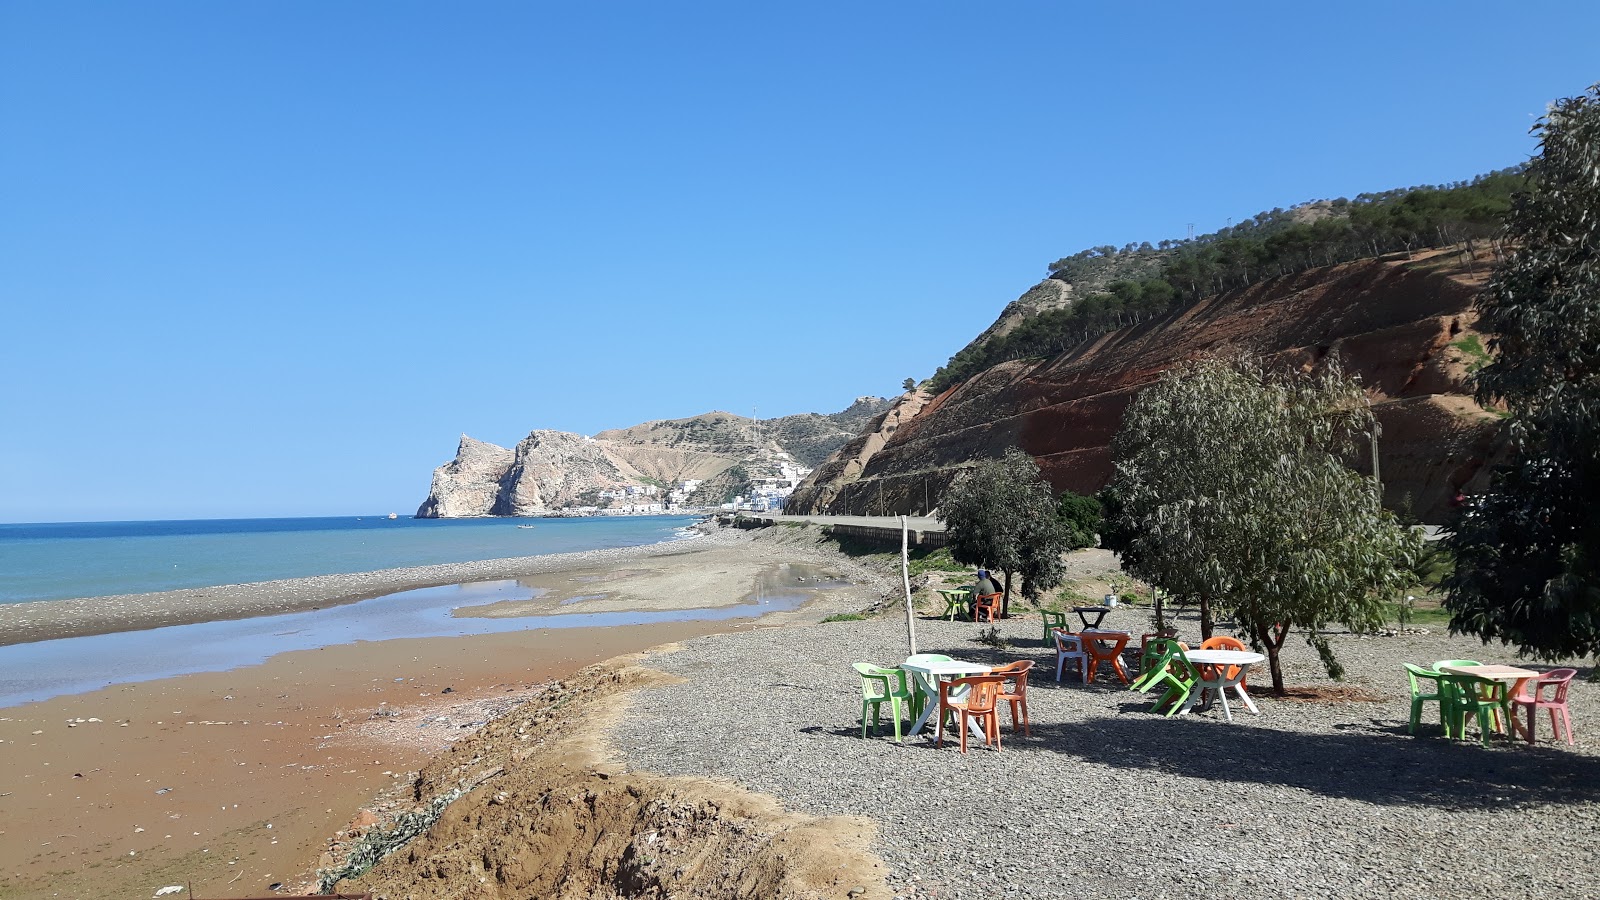 Fotografija Zamana beach z sivi kamenček površino